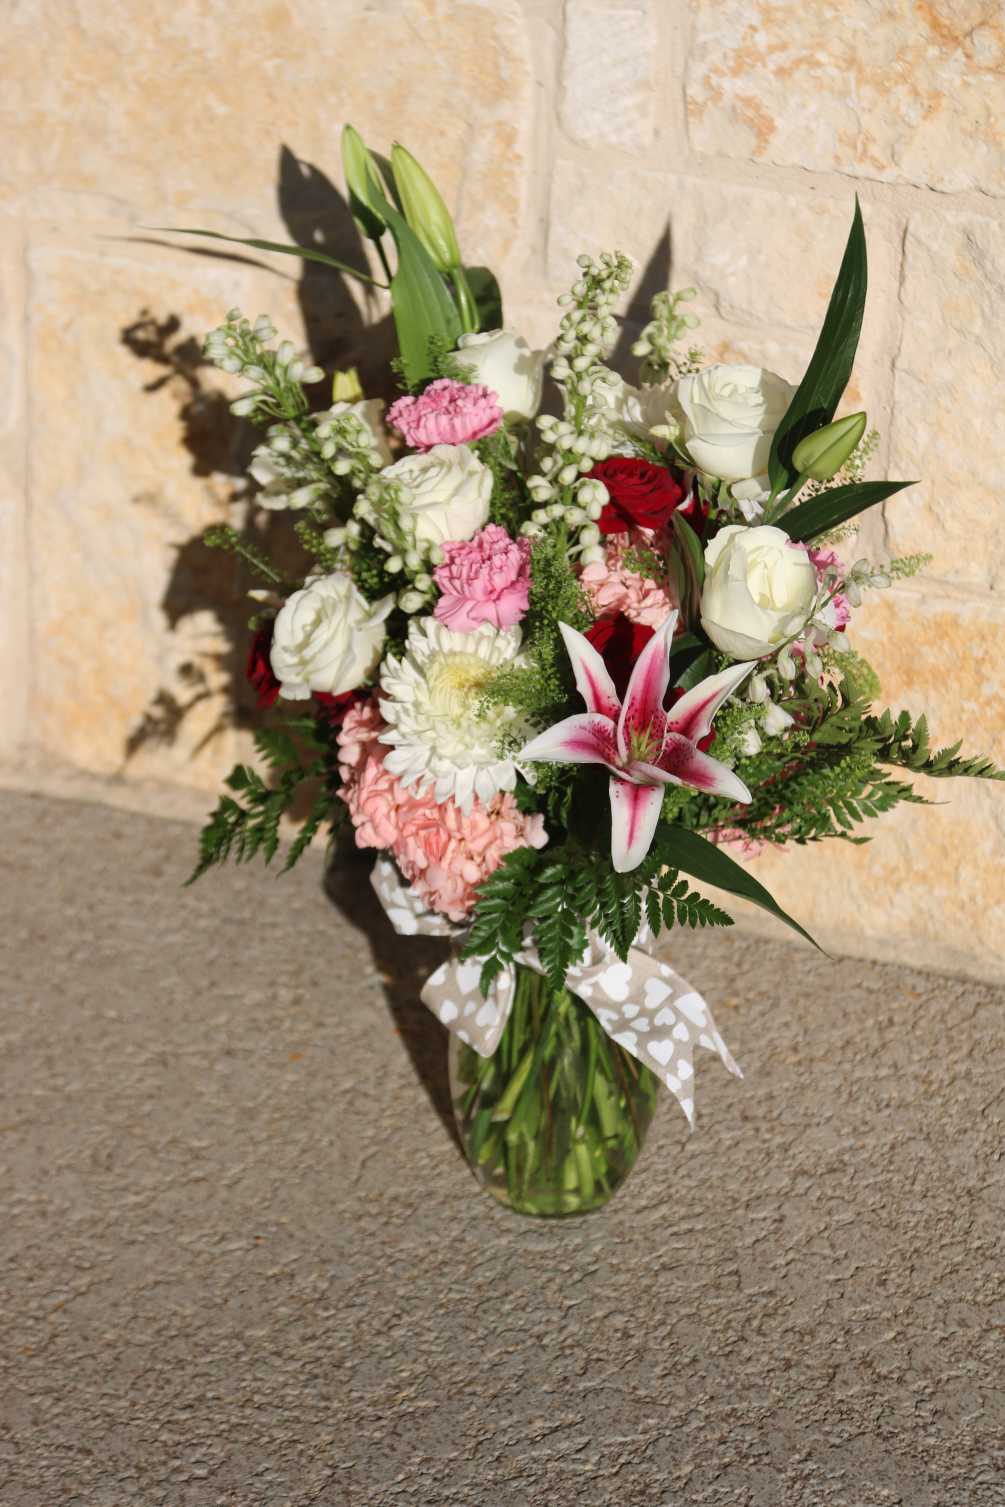 A sweet arrangement guaranteed to bring floral joy!